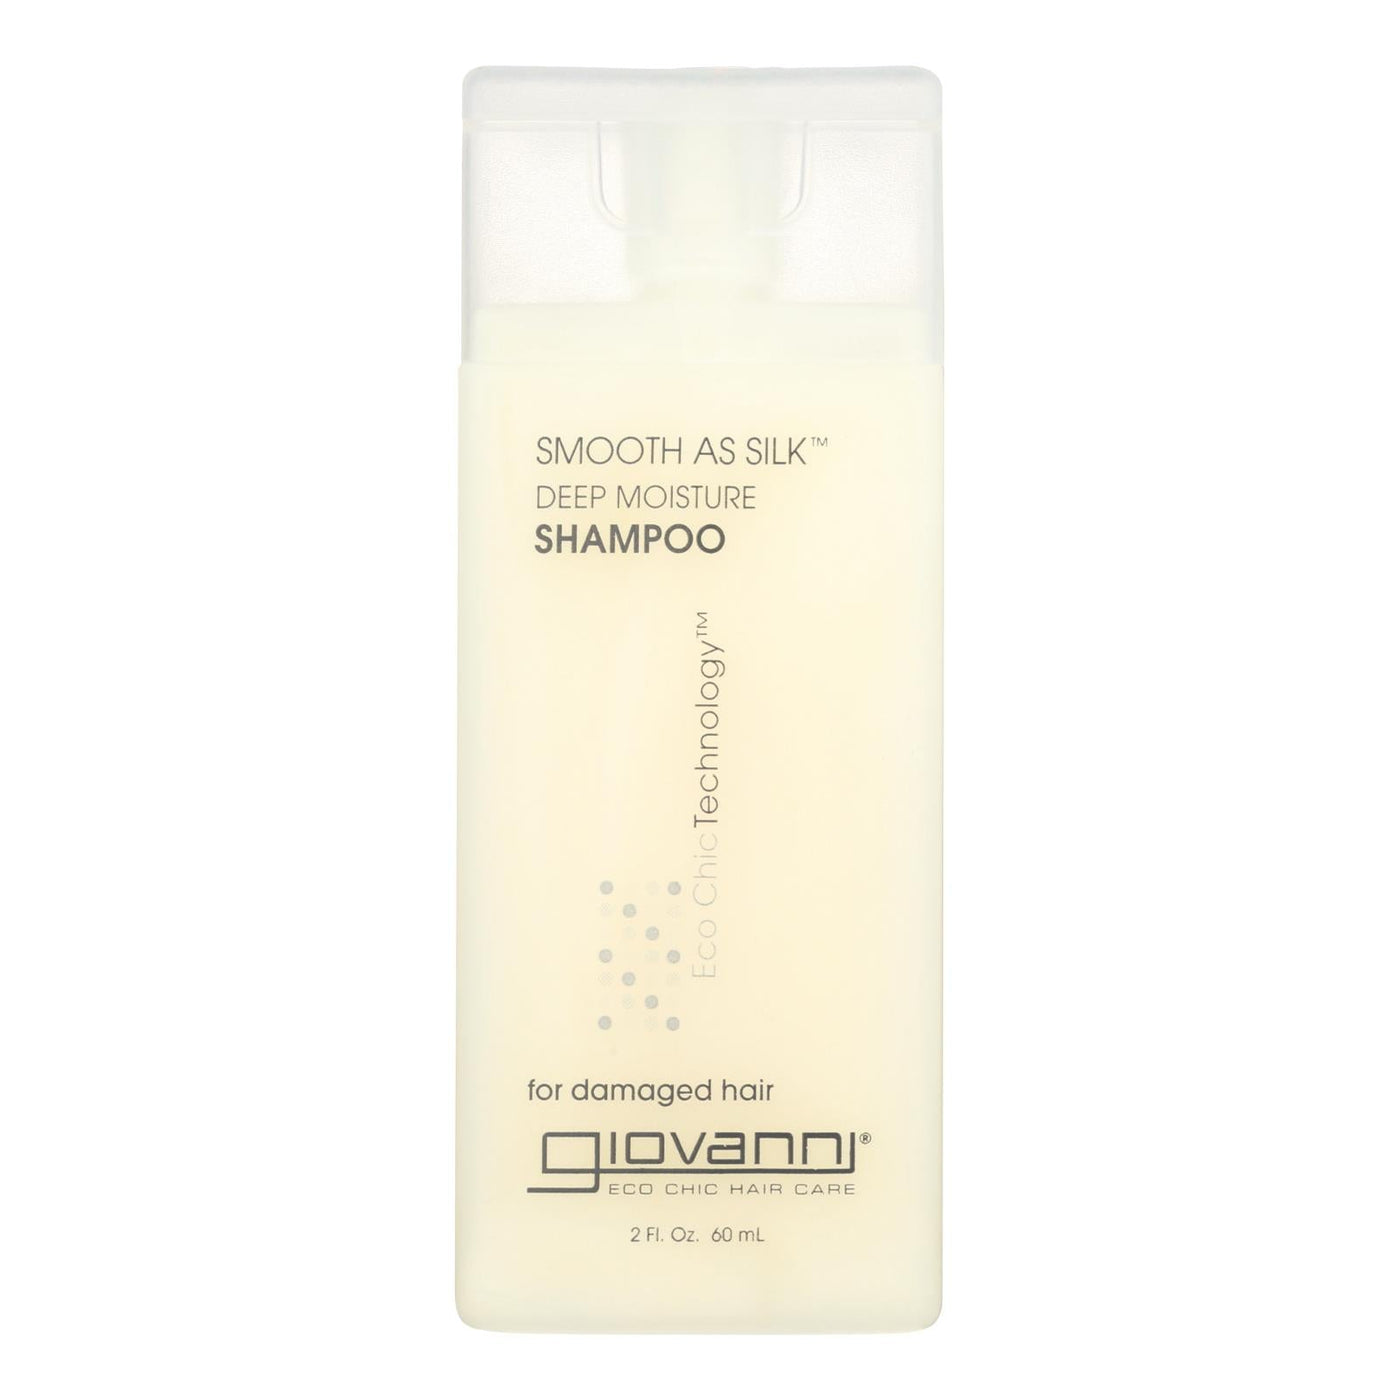 Giovanni Smooth As Silk Deep Moisture Shampoo - 2 Fl Oz - Case Of 12 | OnlyNaturals.us